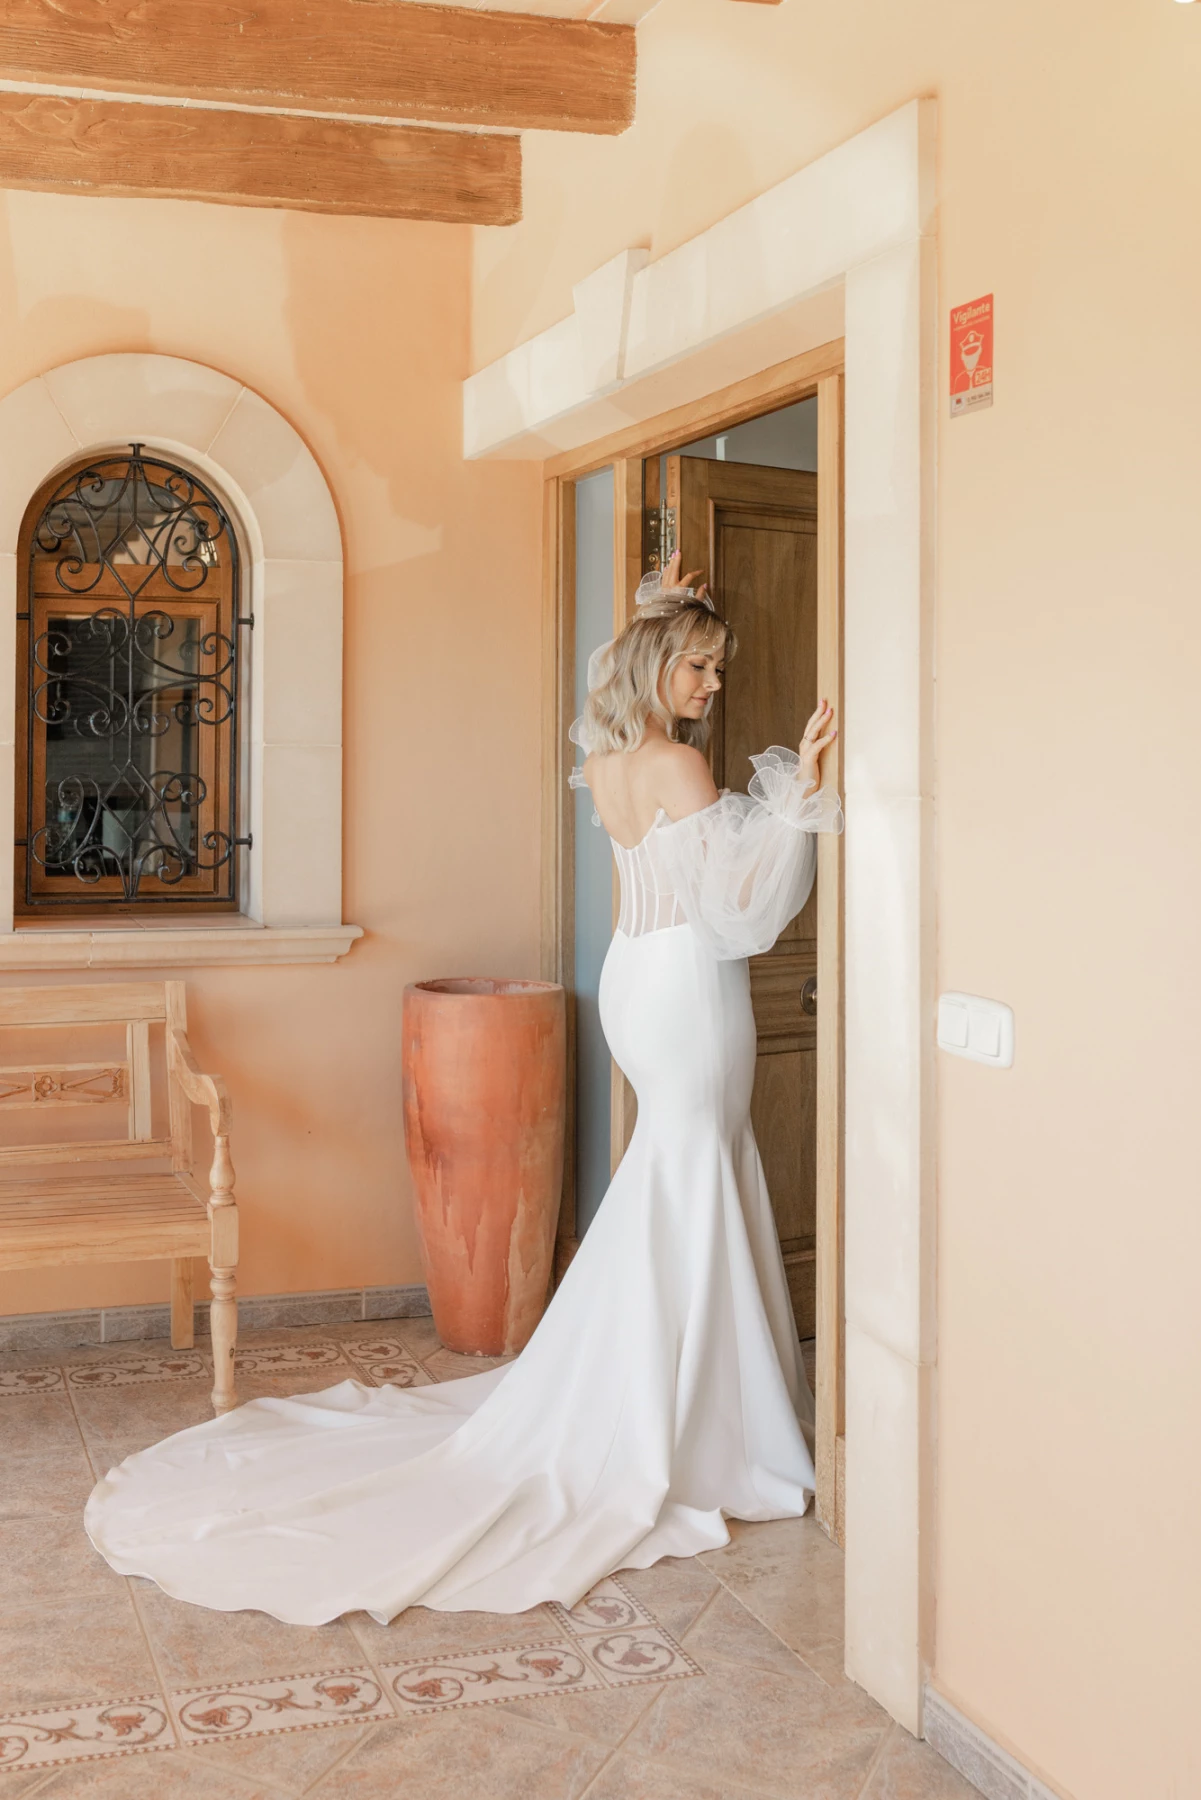 Wedding photographer Mallorca - capturing emotions